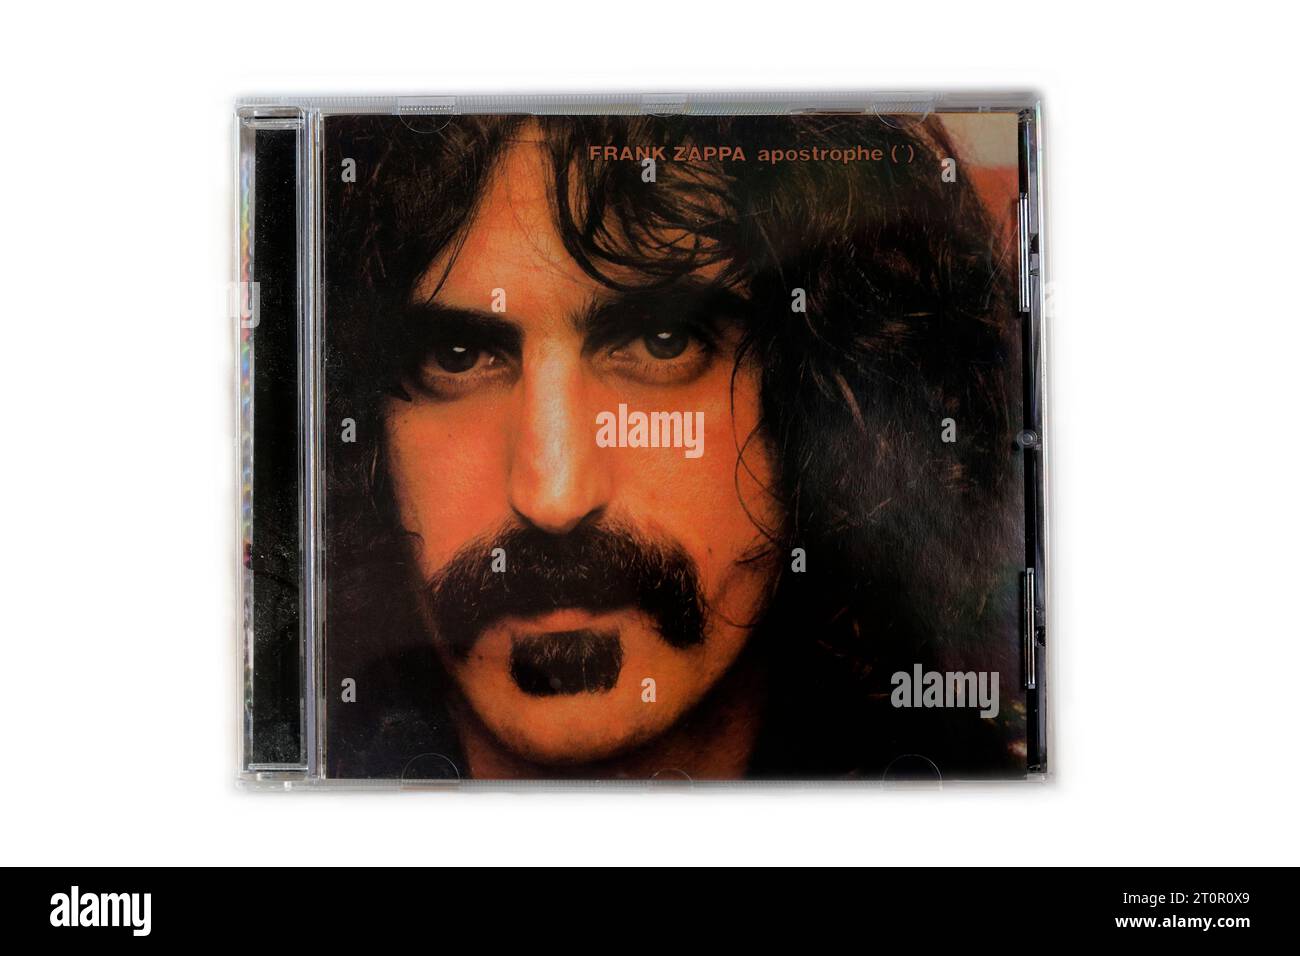 Frank Zappa - Apostrophe - used CD case on light background Stock Photo